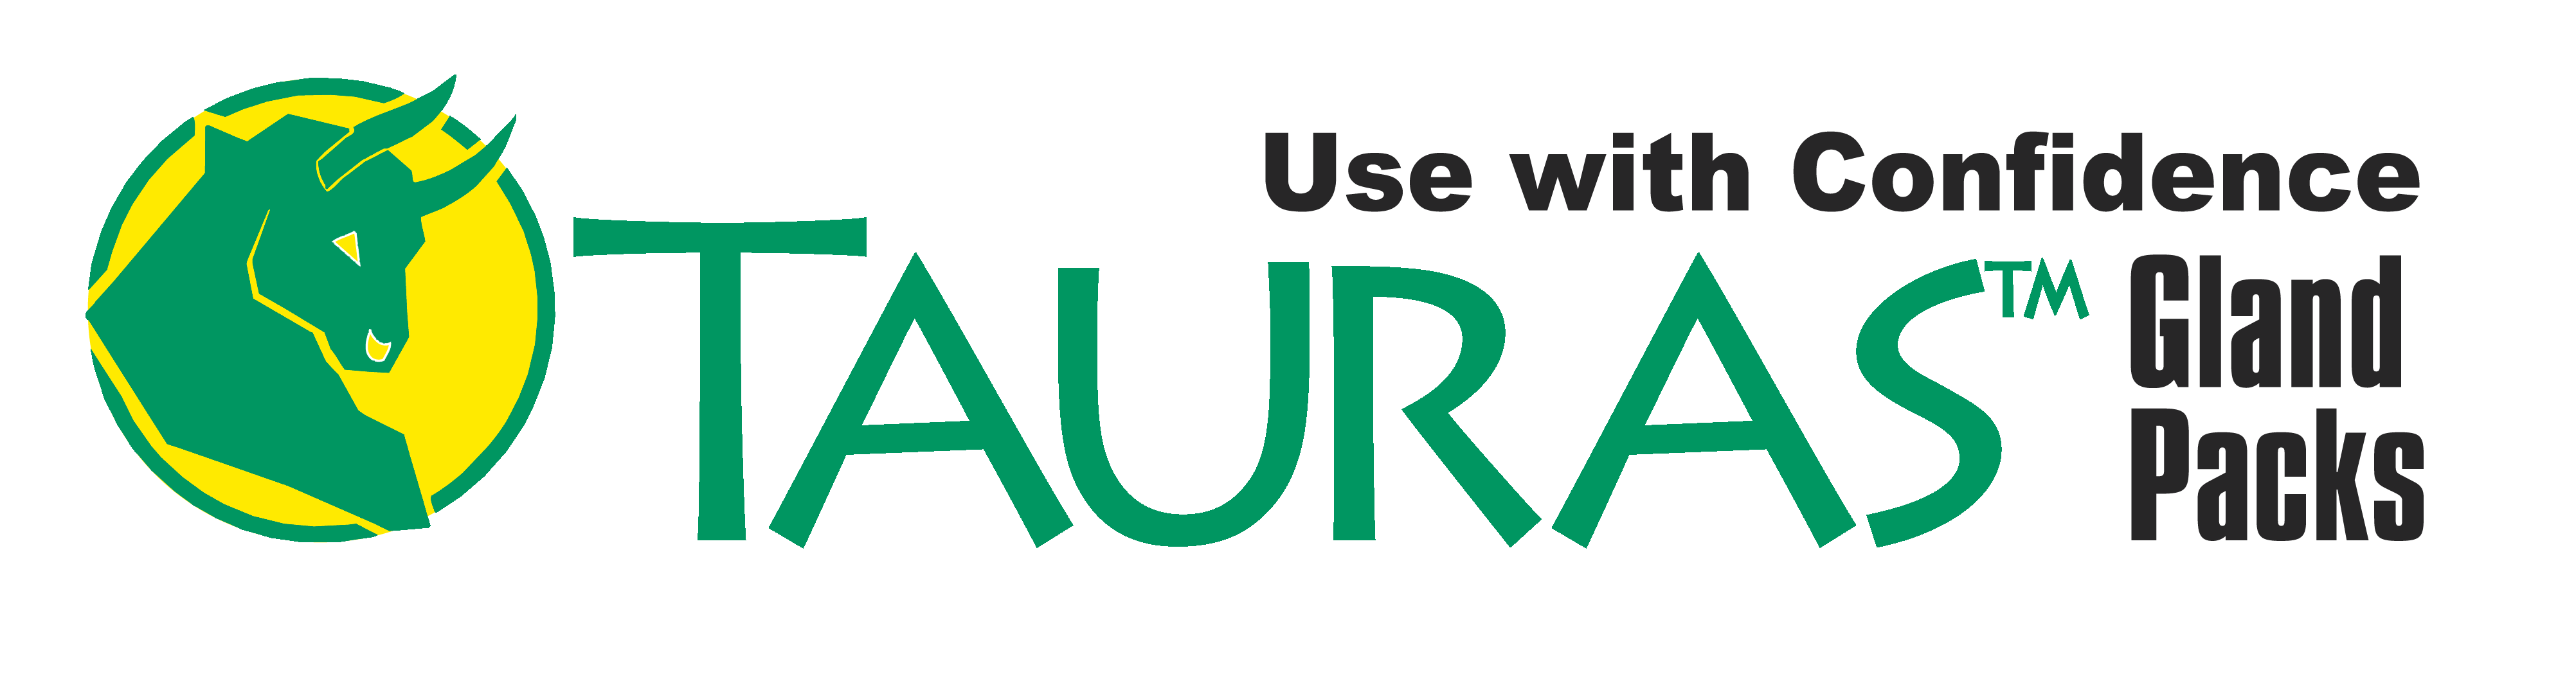 Tauras Logo